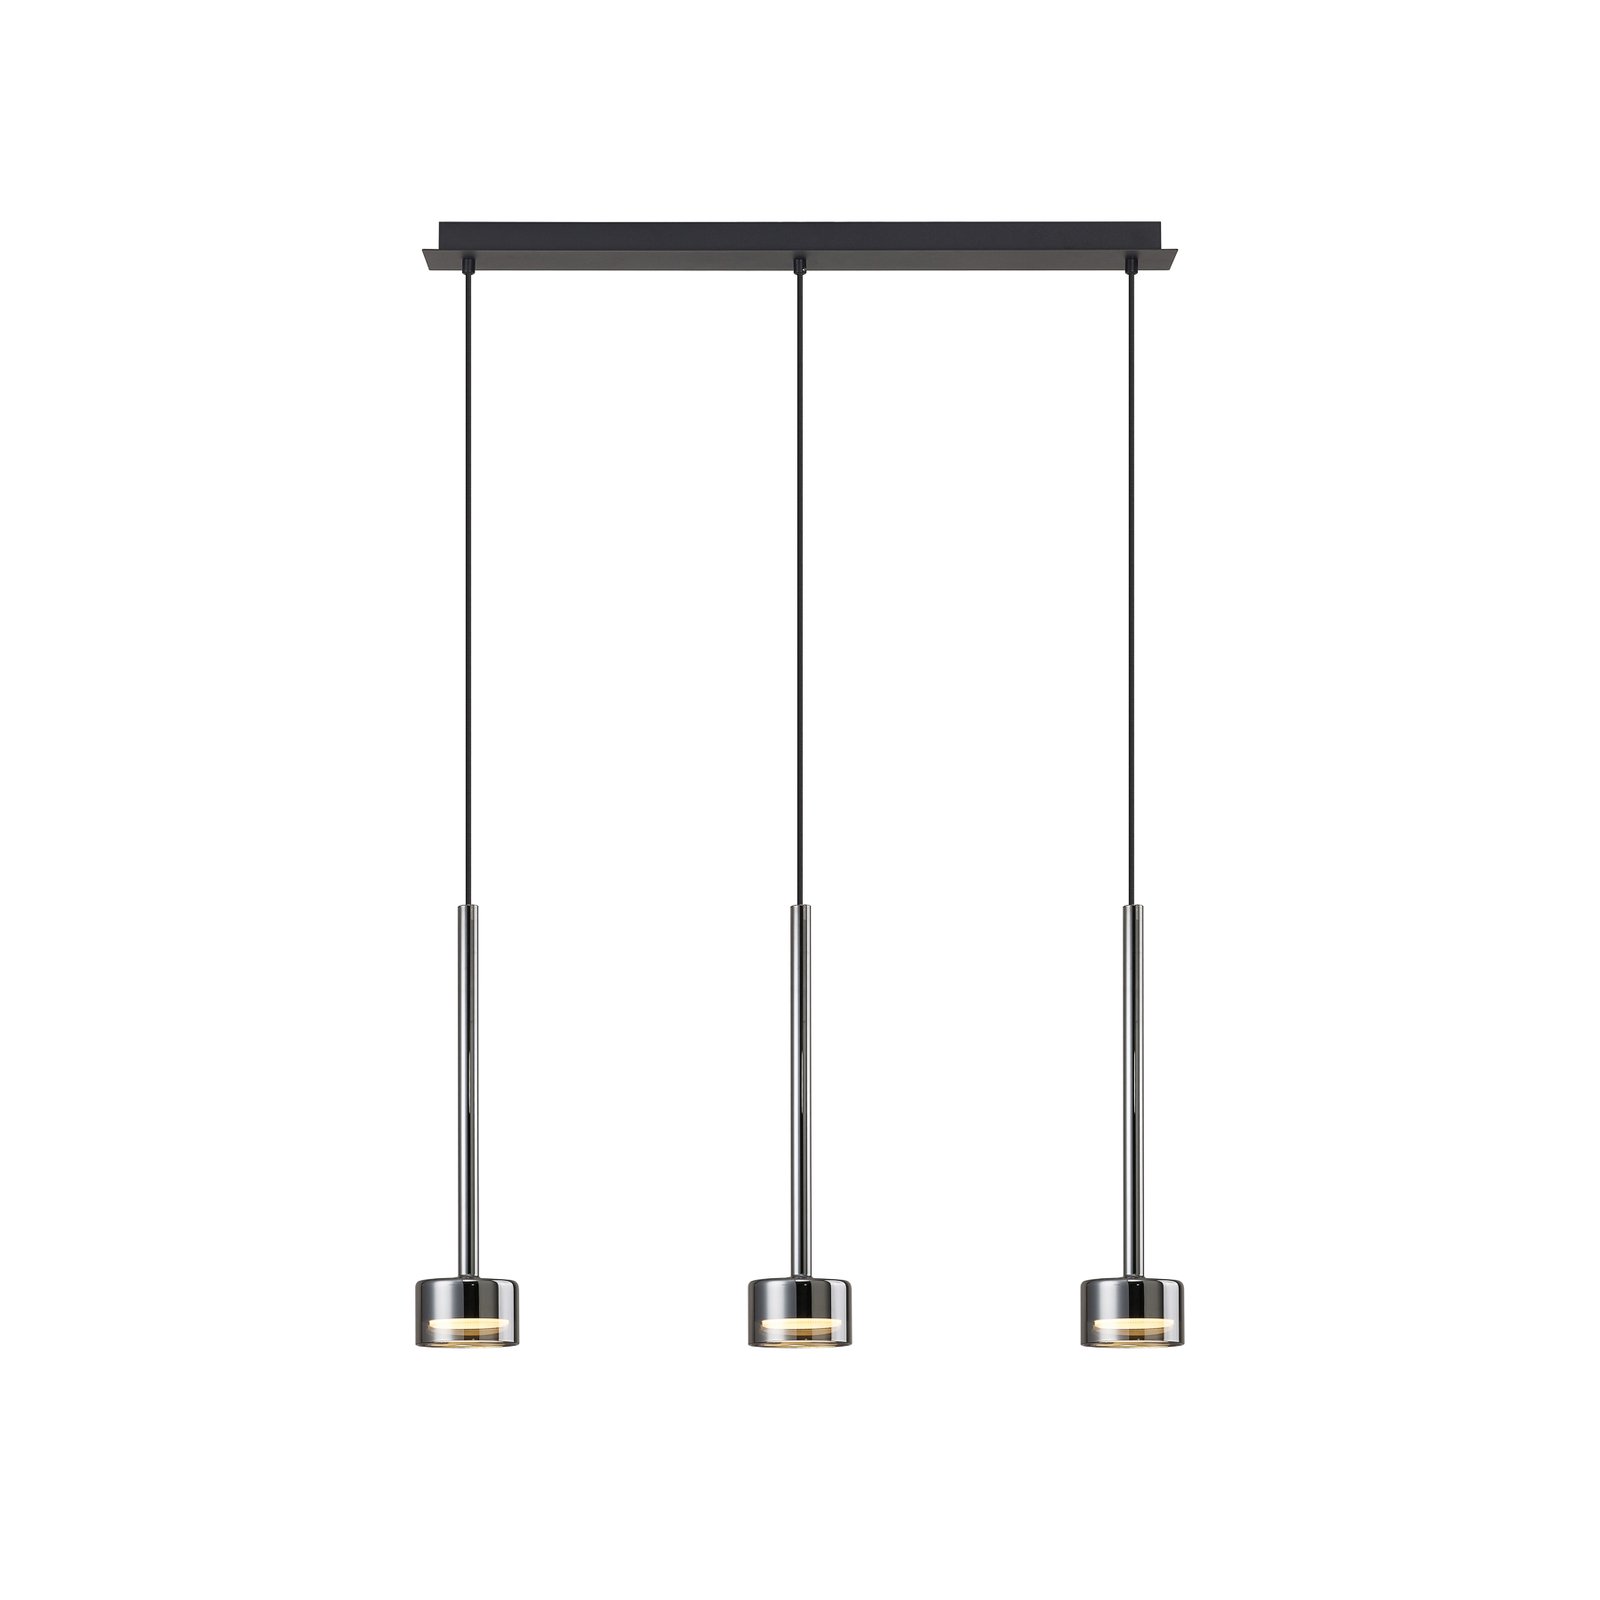 Hanglamp Tonic, zwart/chroom, balk, 3-lamps, metaal, glas